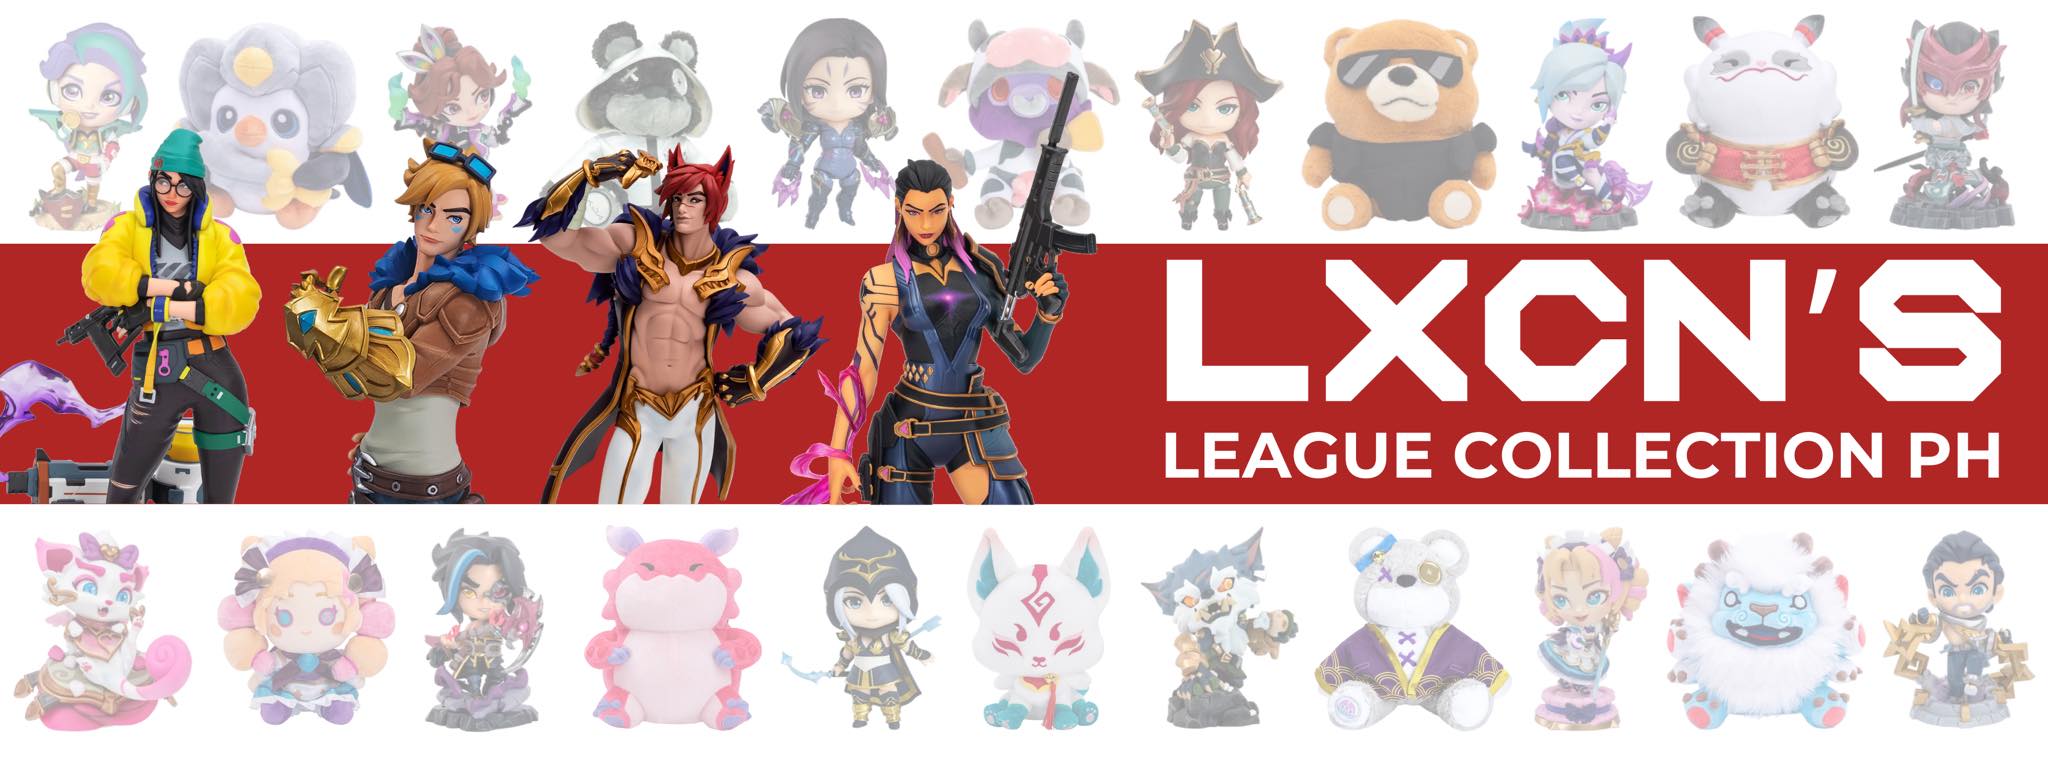 Lxcns League Collection Ph